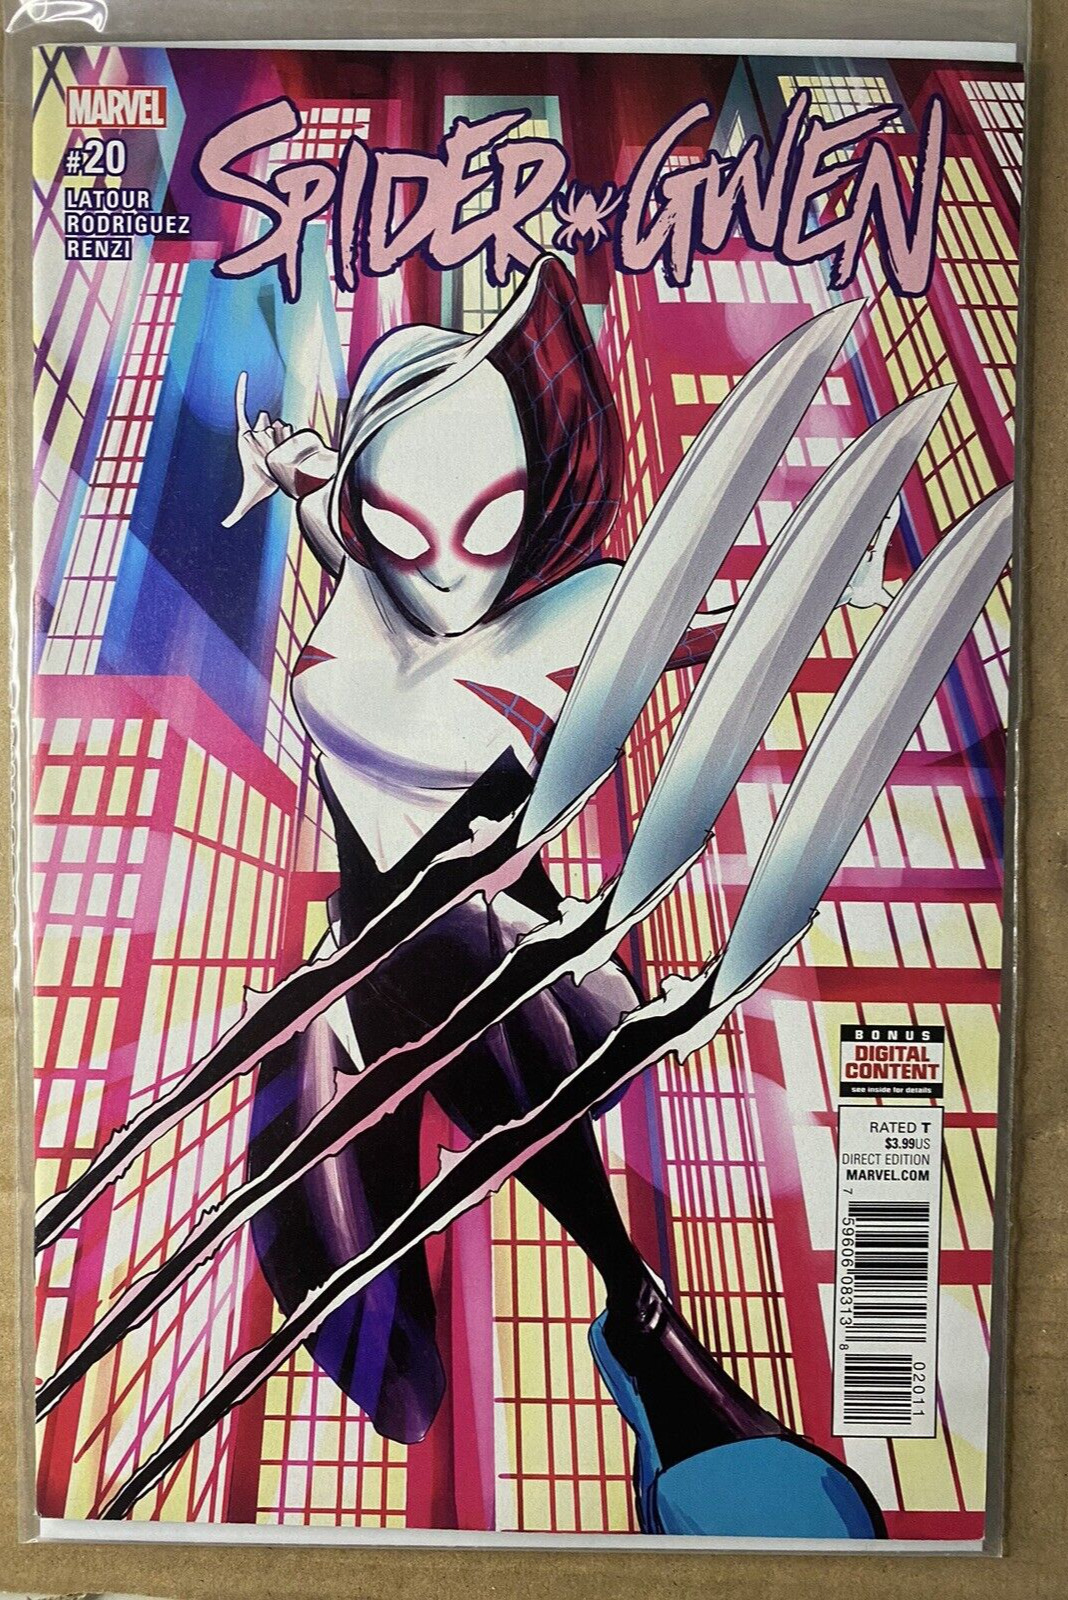 Spider-Gwen #20, Vol 2 - (2017) - Marvel Comics - VF/NM